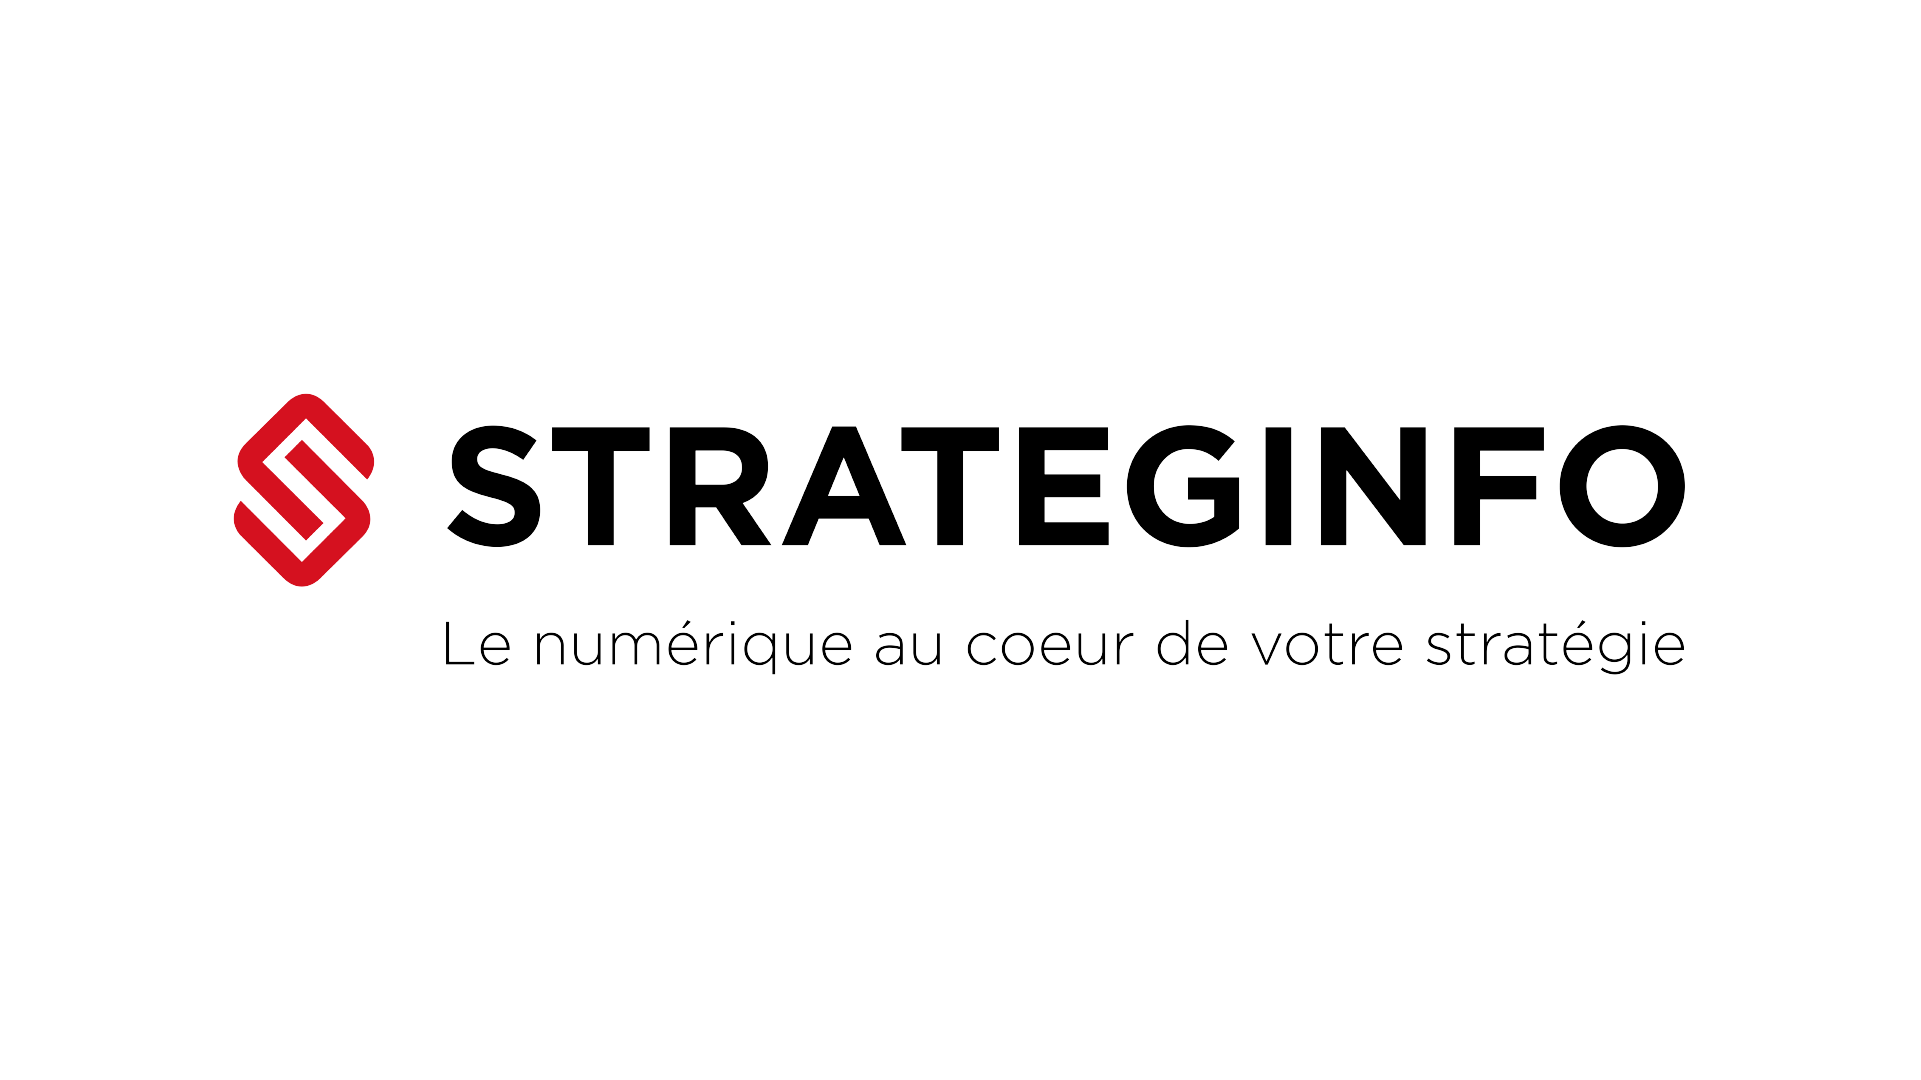 Strateginfo logo